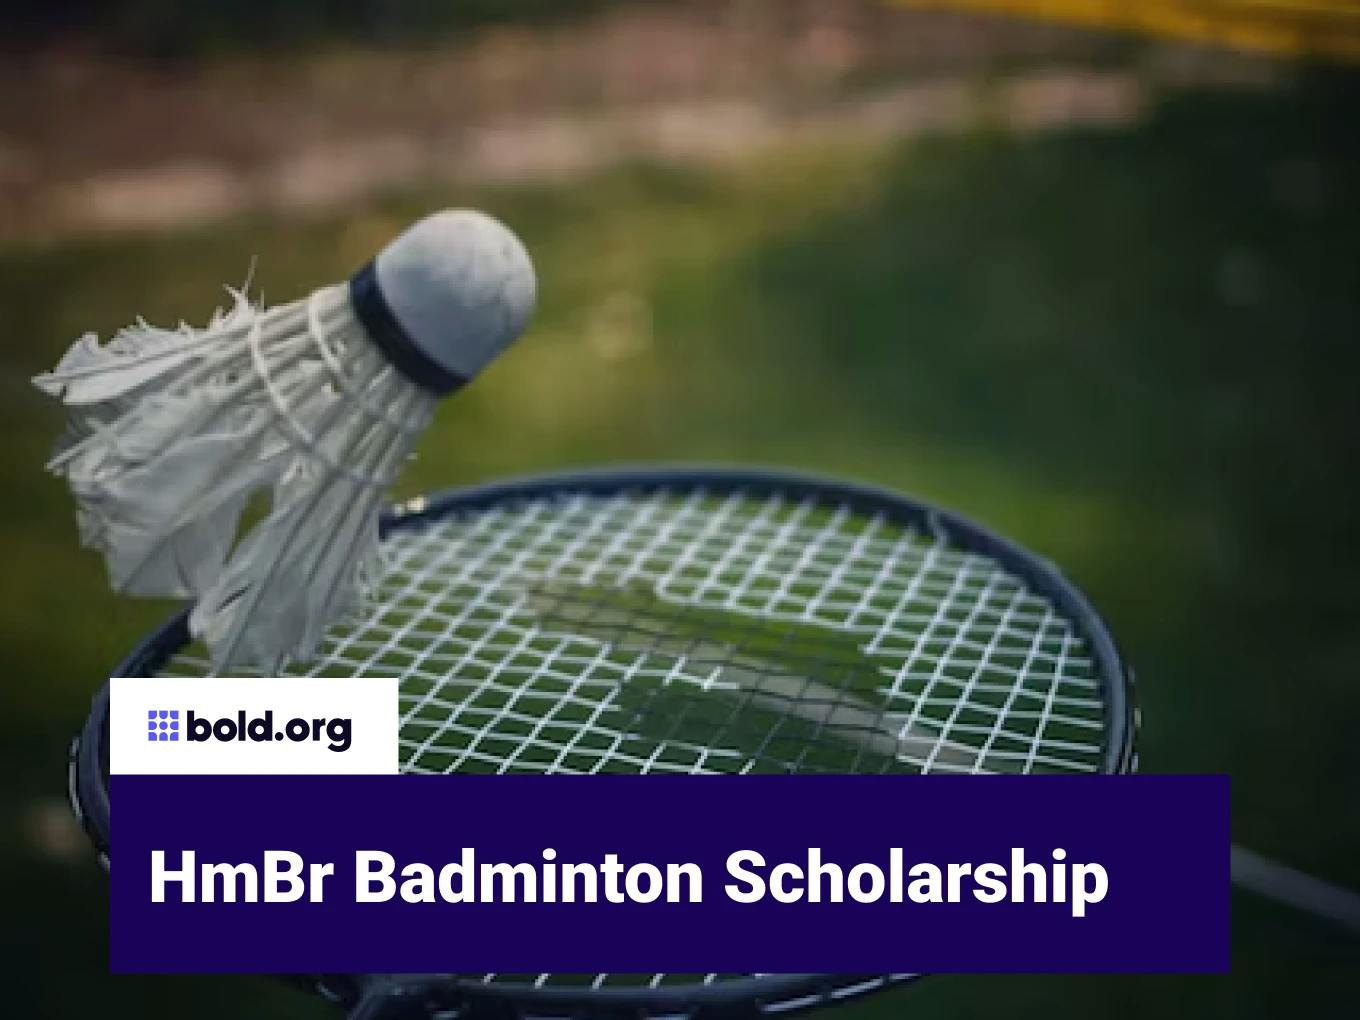 HmBr Badminton Scholarship Fund